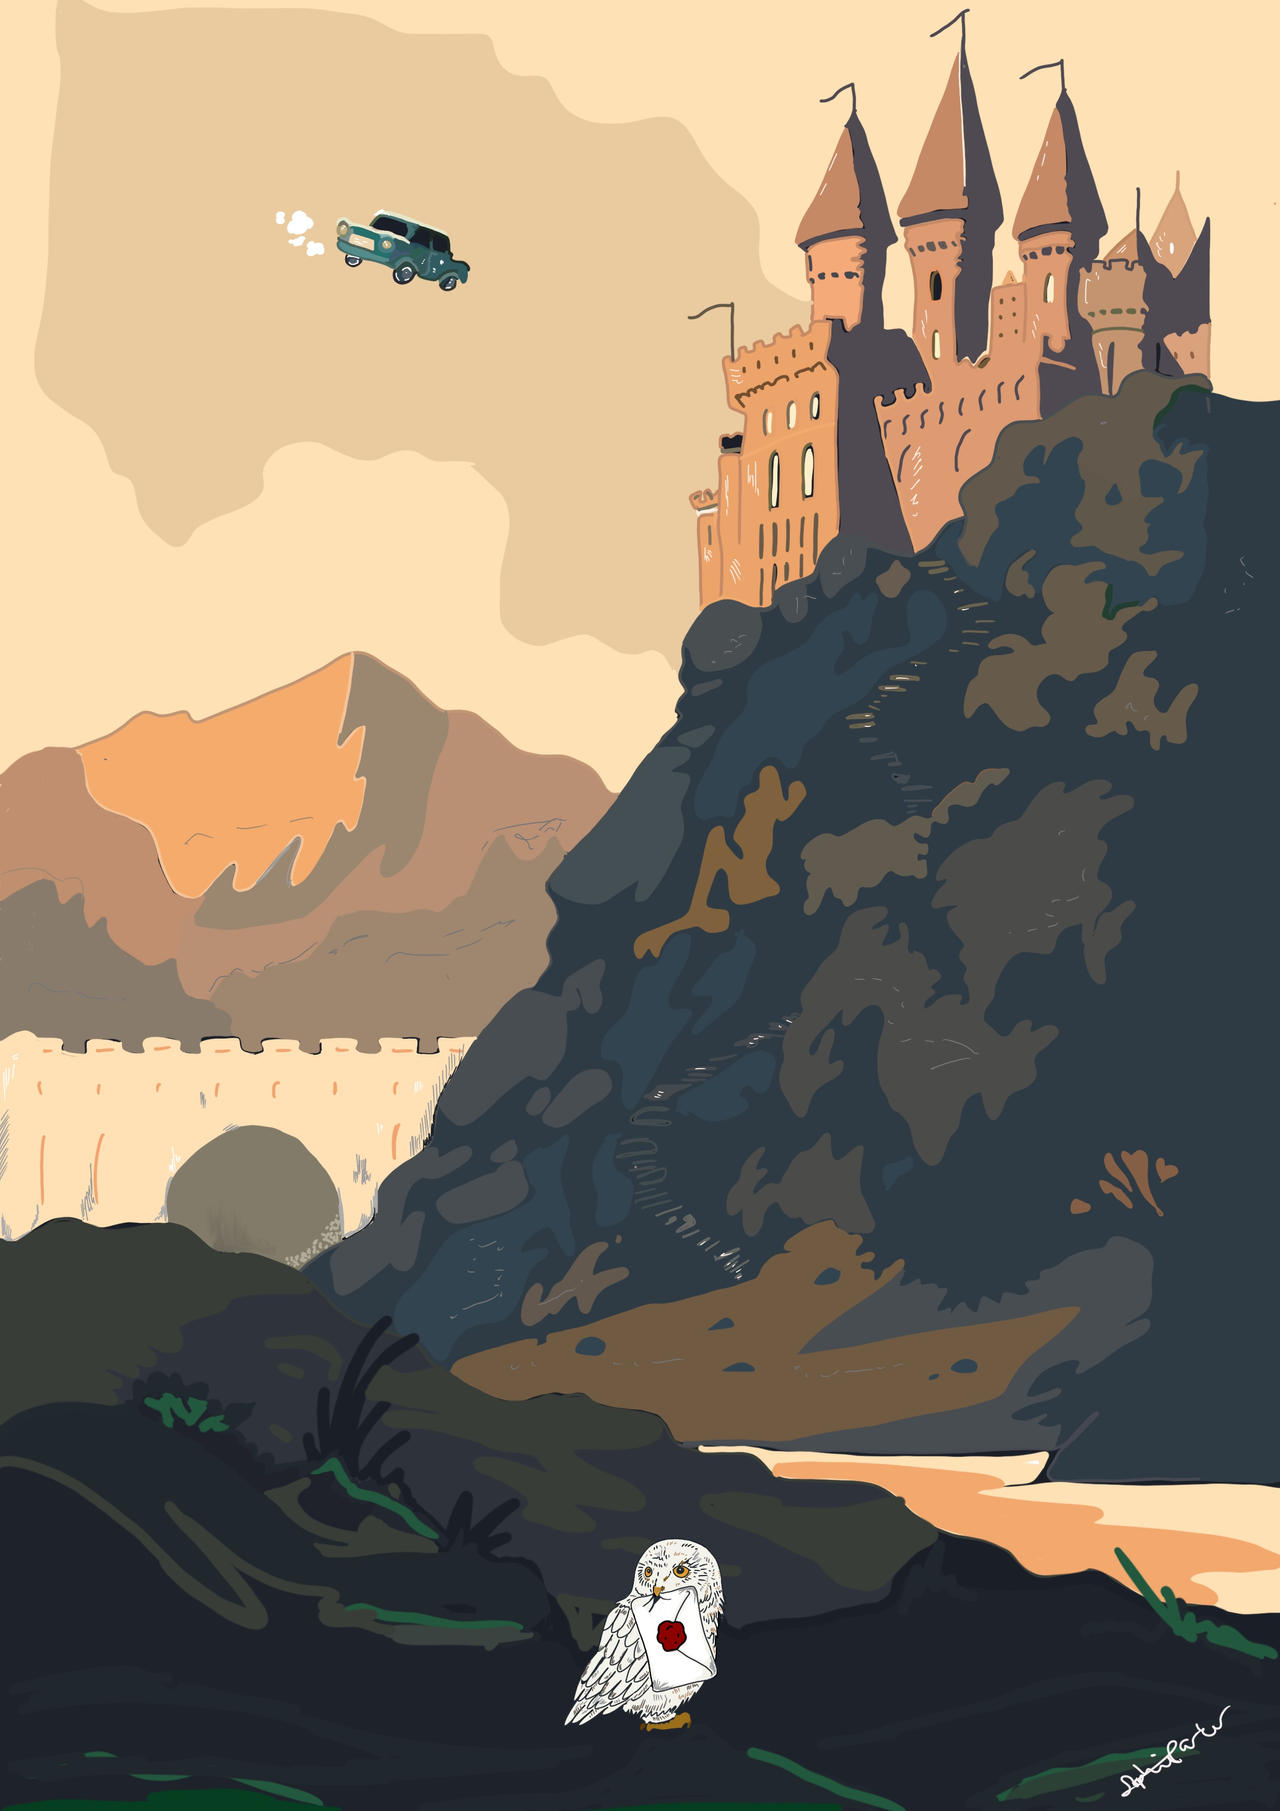 Hogwarts - Harry Potter Wallpaper by Arch Apolar by Spirit--Of-Adventure on  DeviantArt